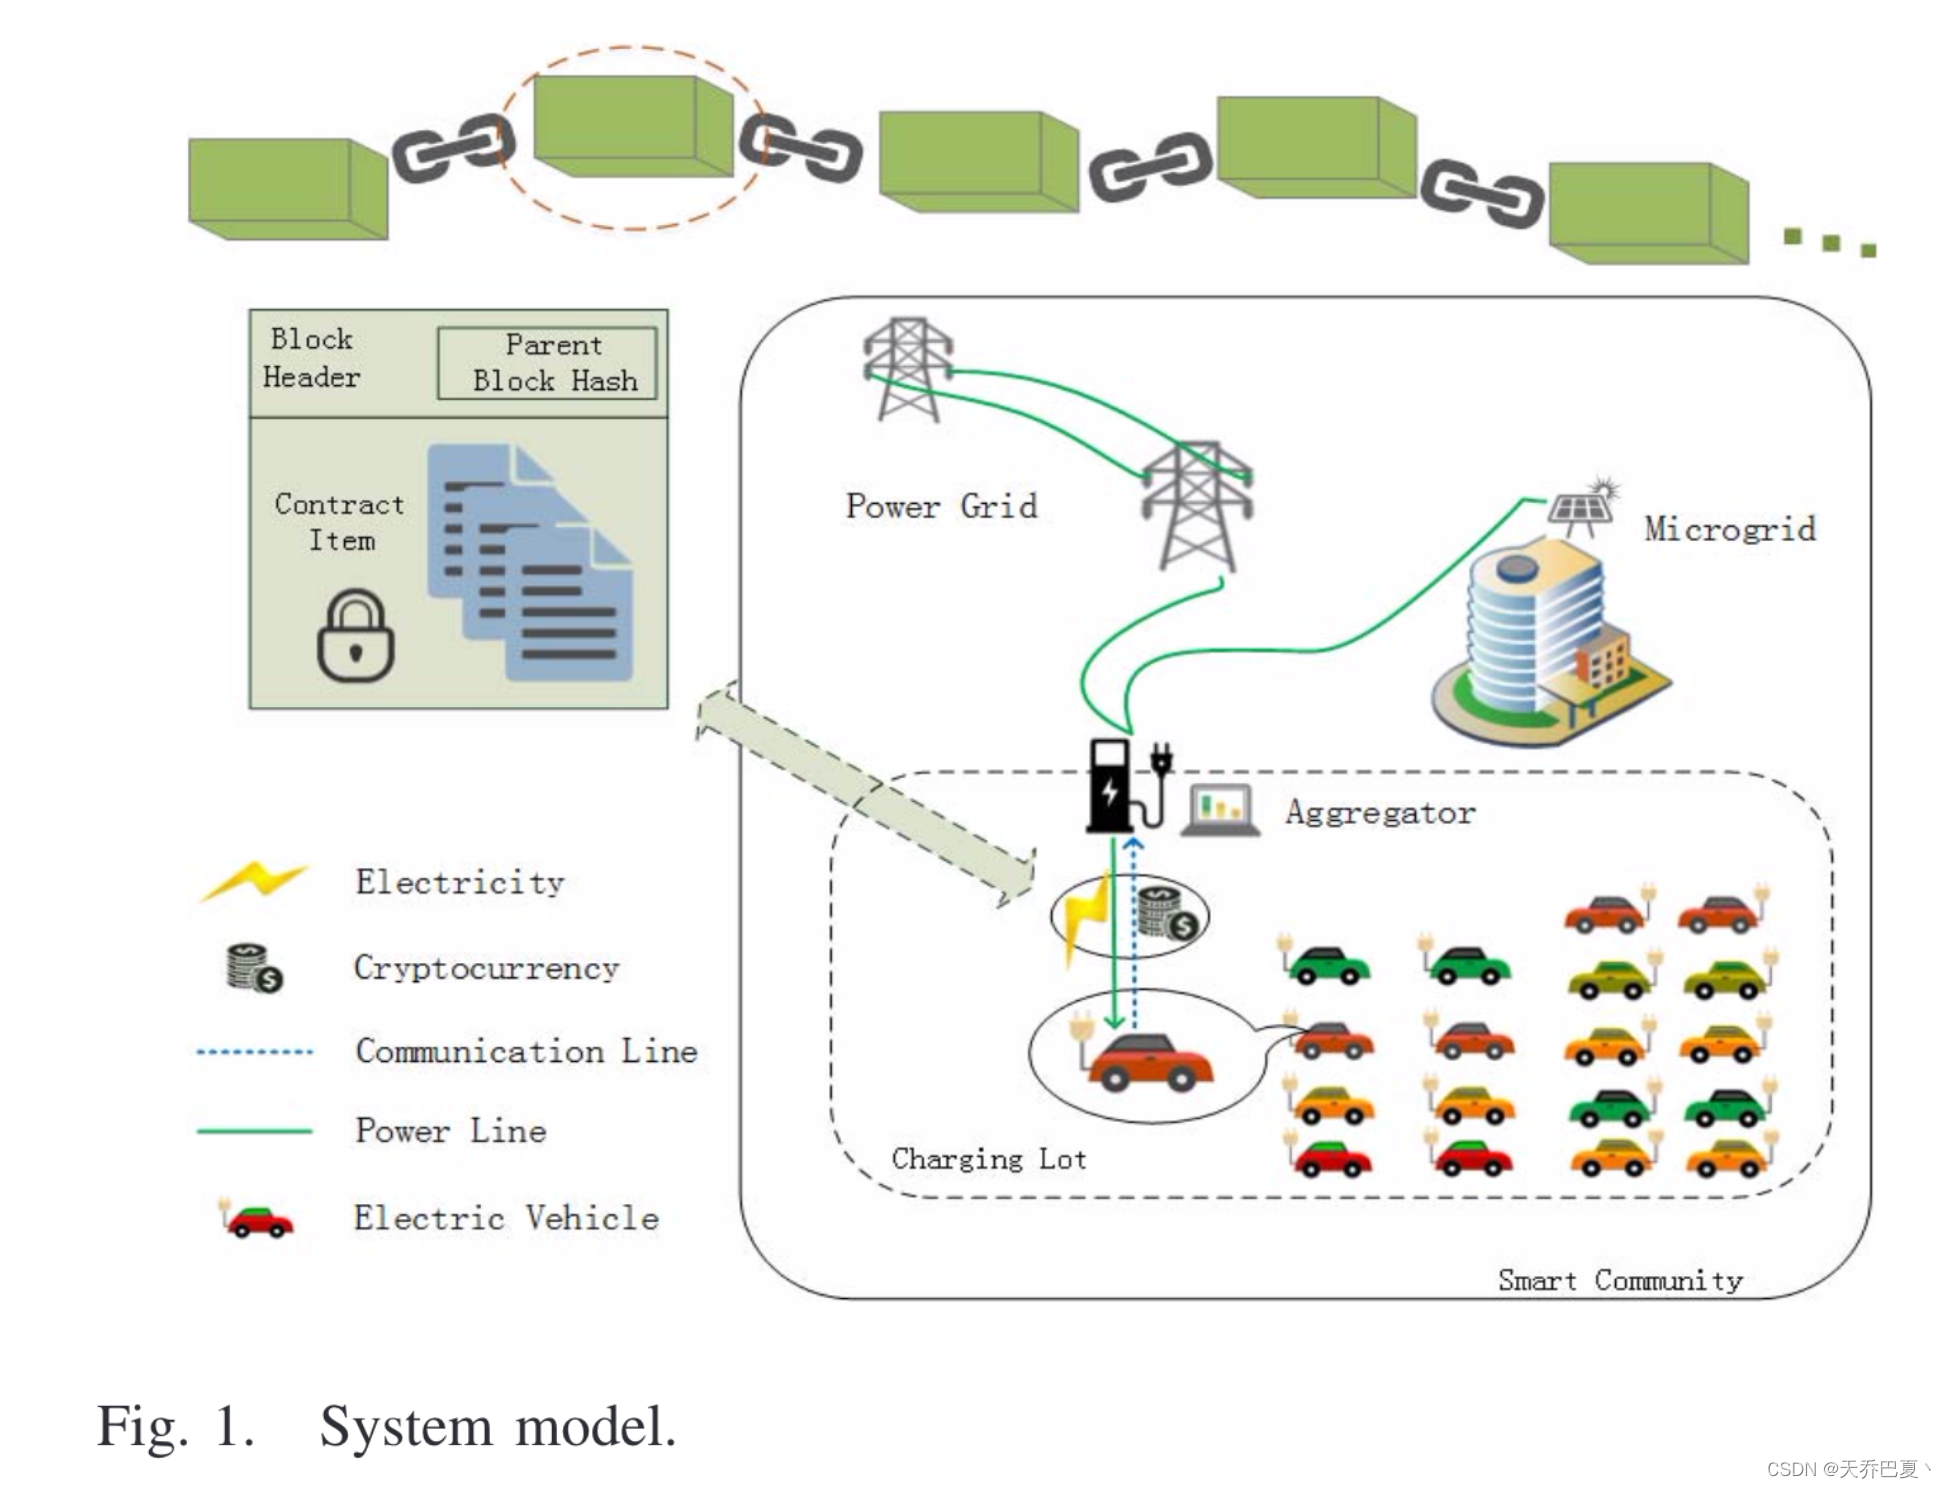 system model